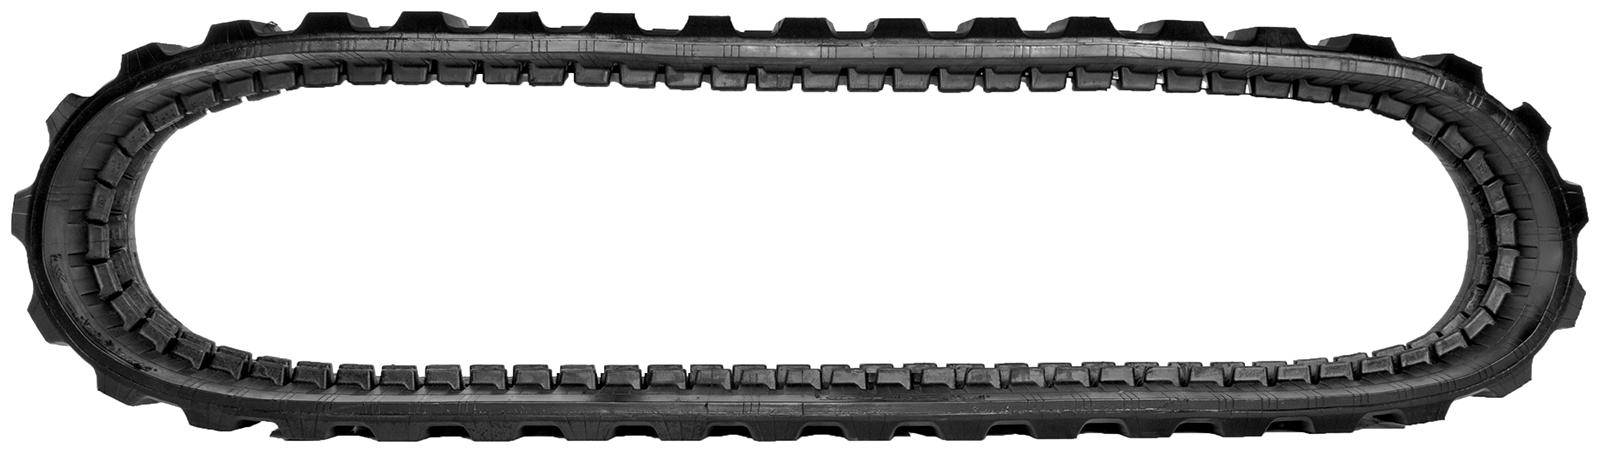 set of 2 16" heavy duty rubber track (400x72.5kx74)